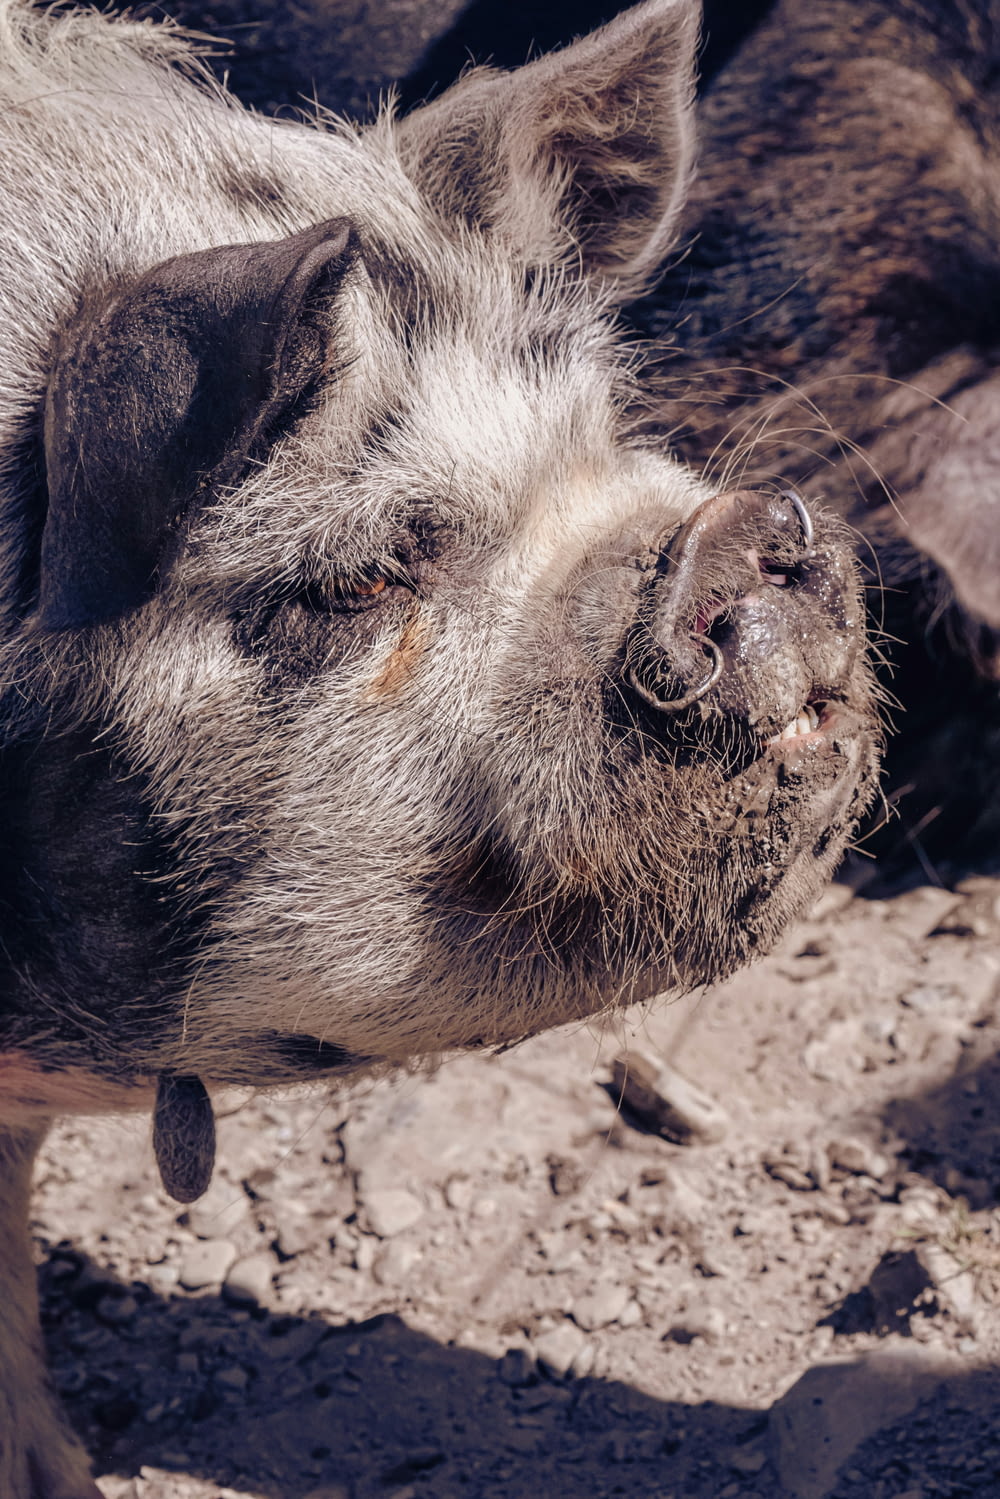 a close up of a pig on a dirt ground